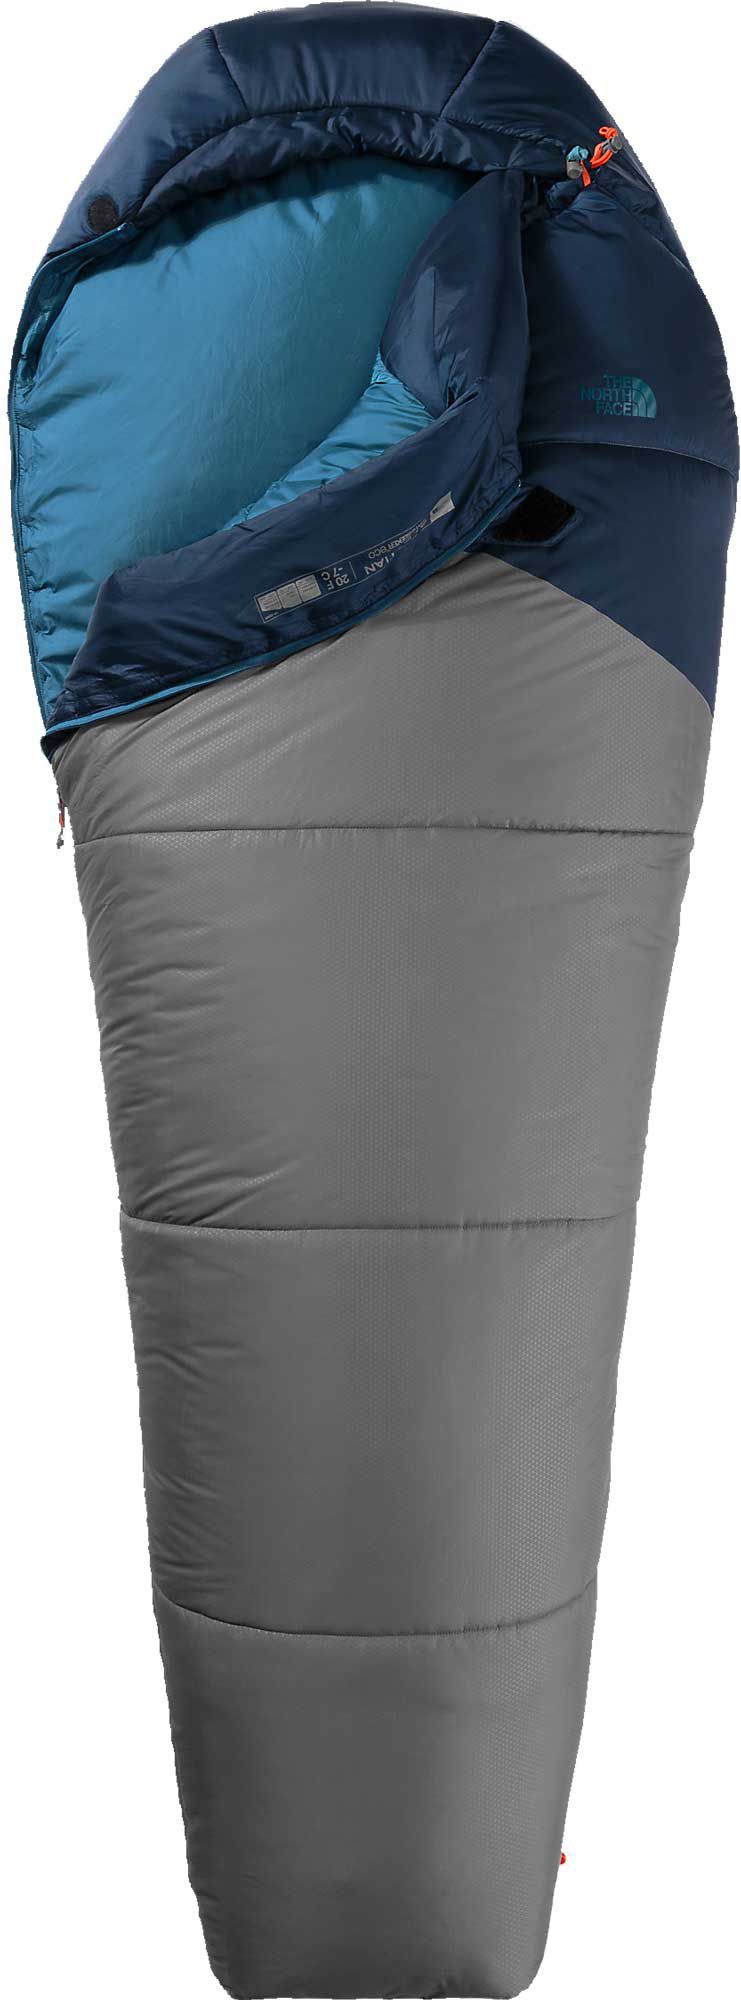 north face aleutian sleeping bag